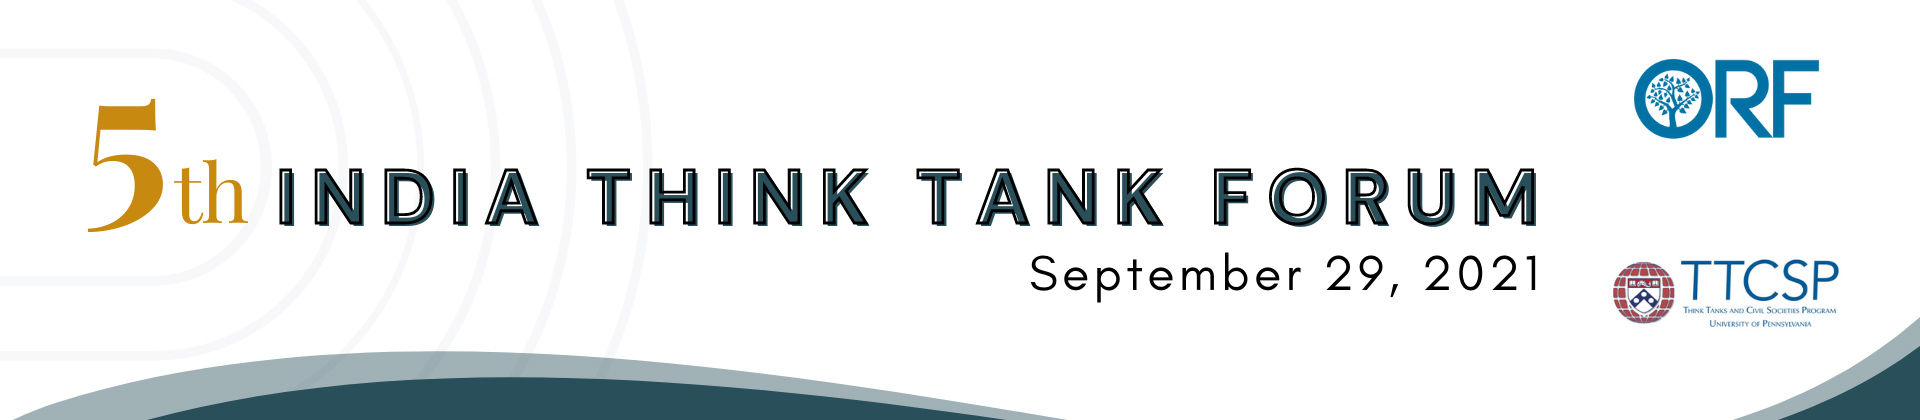 5th India Think Tank Forum